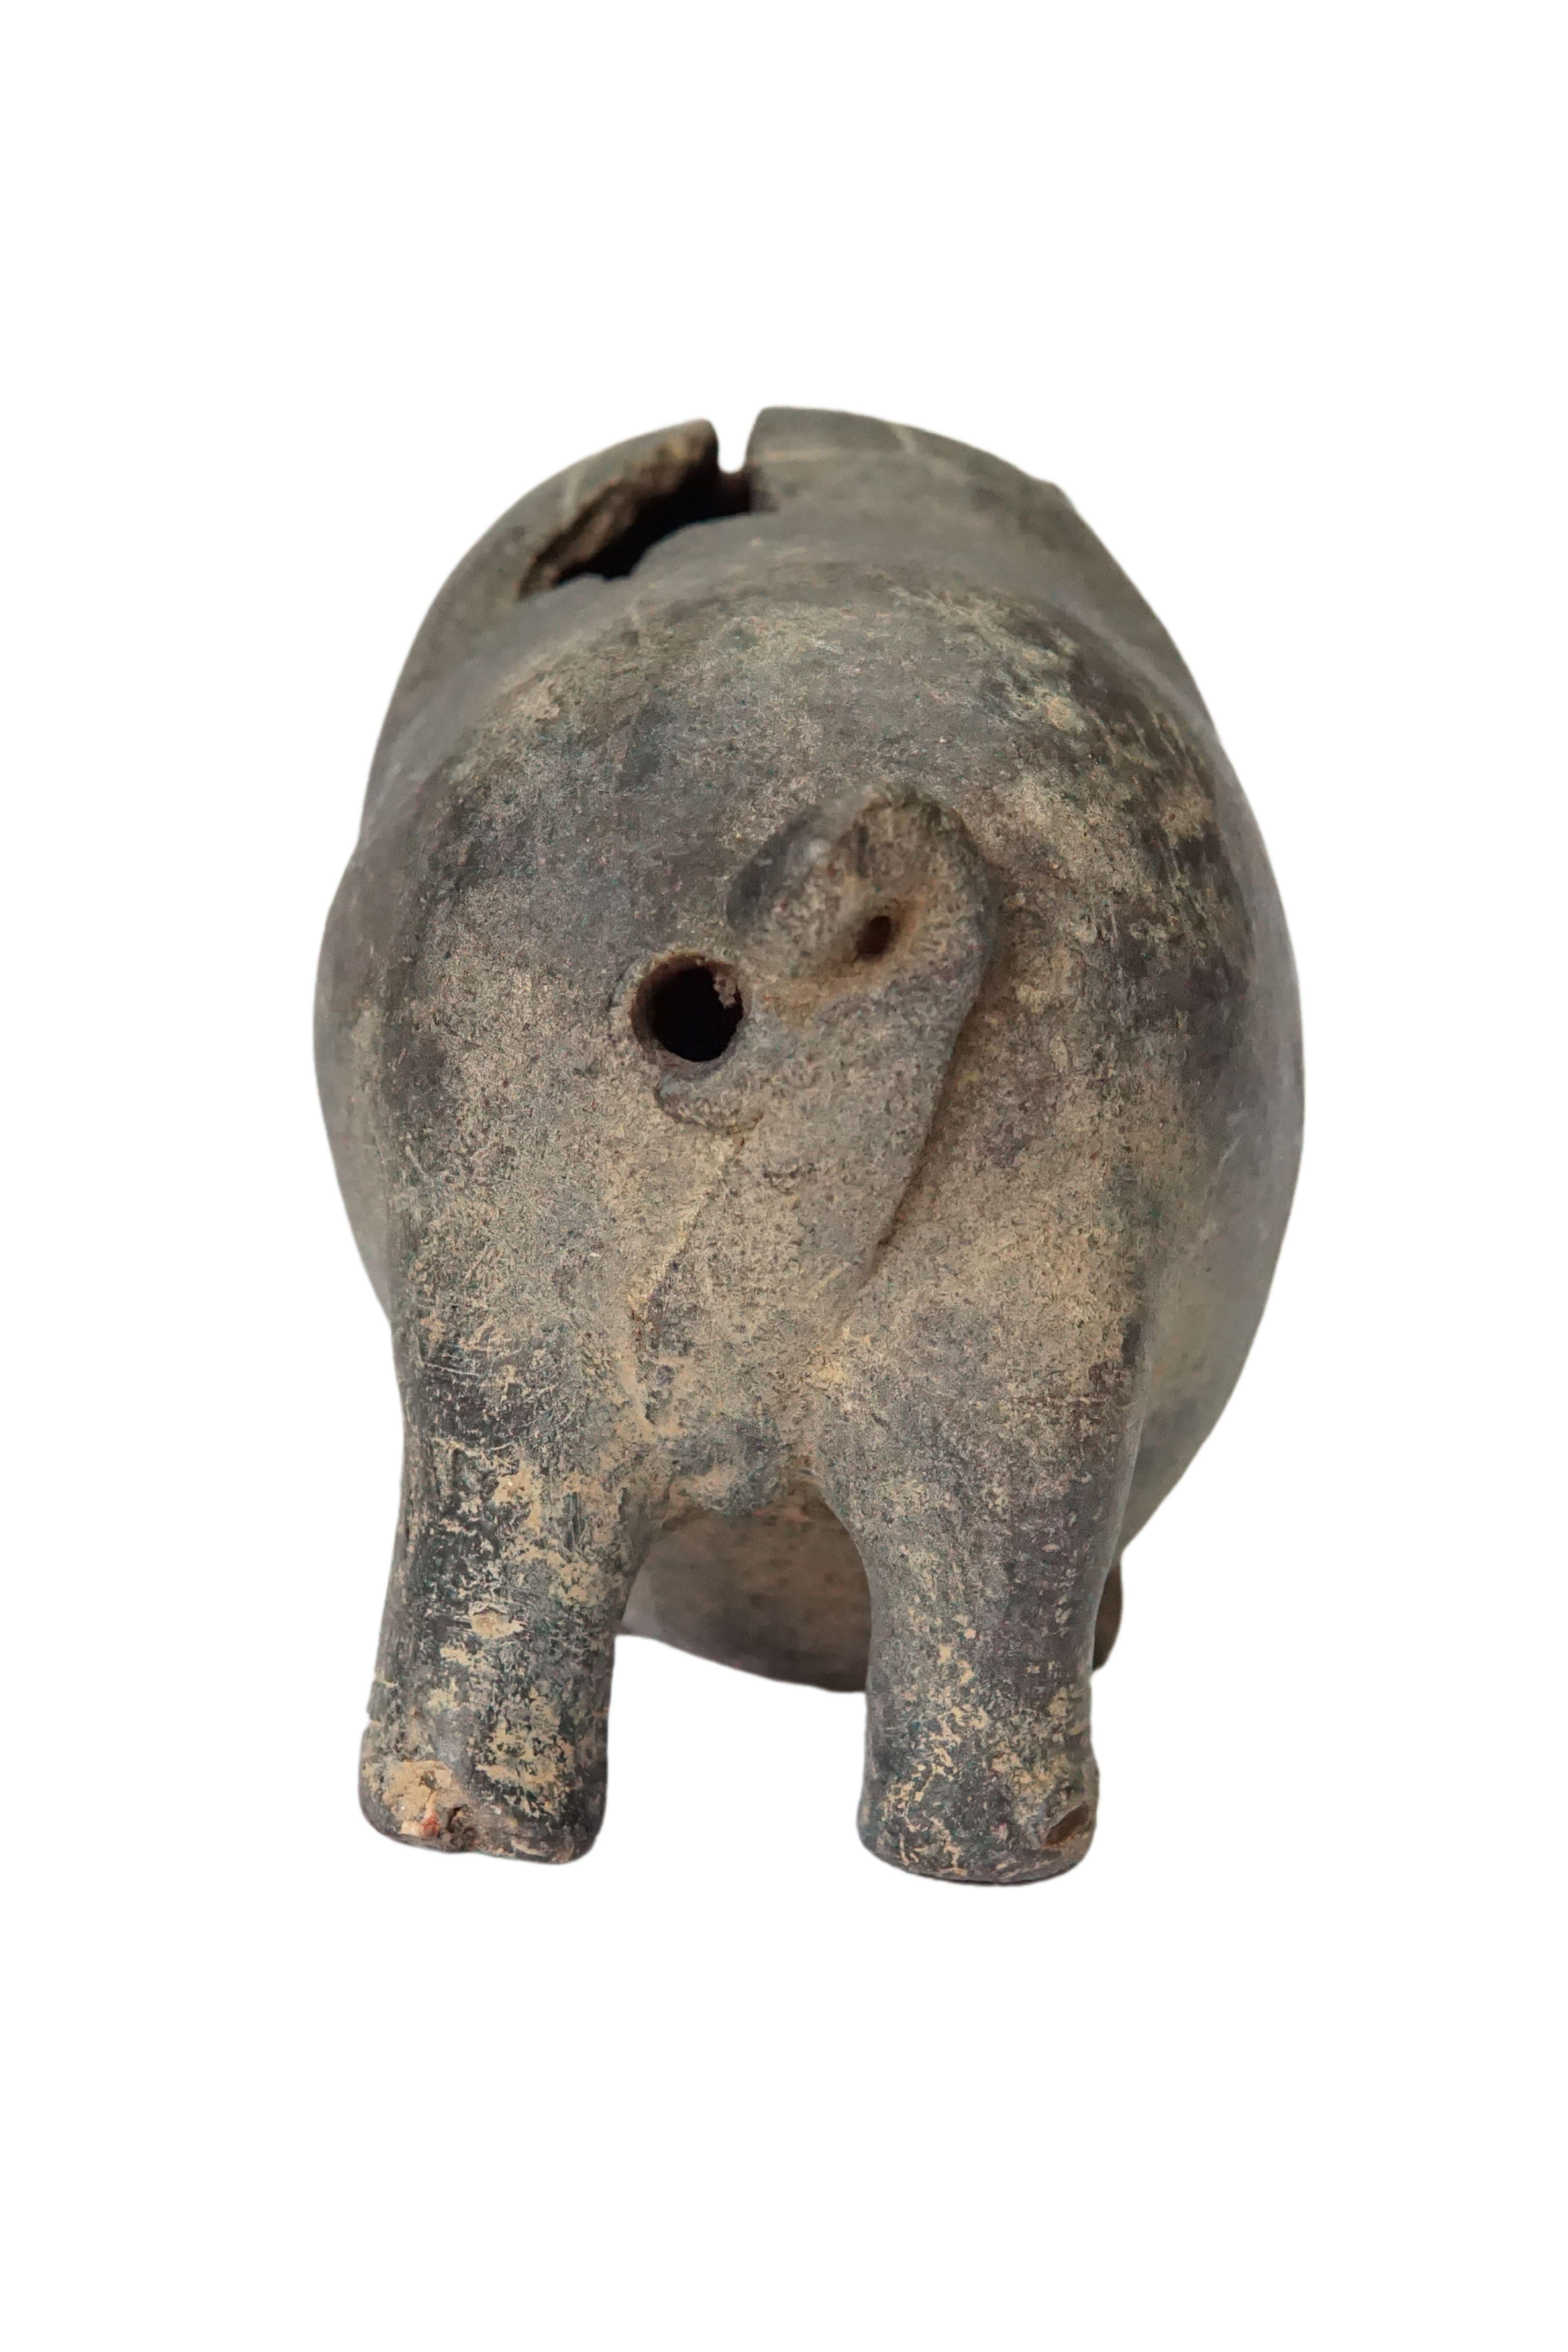 Other Majapahit Terracotta Boar / Pig 